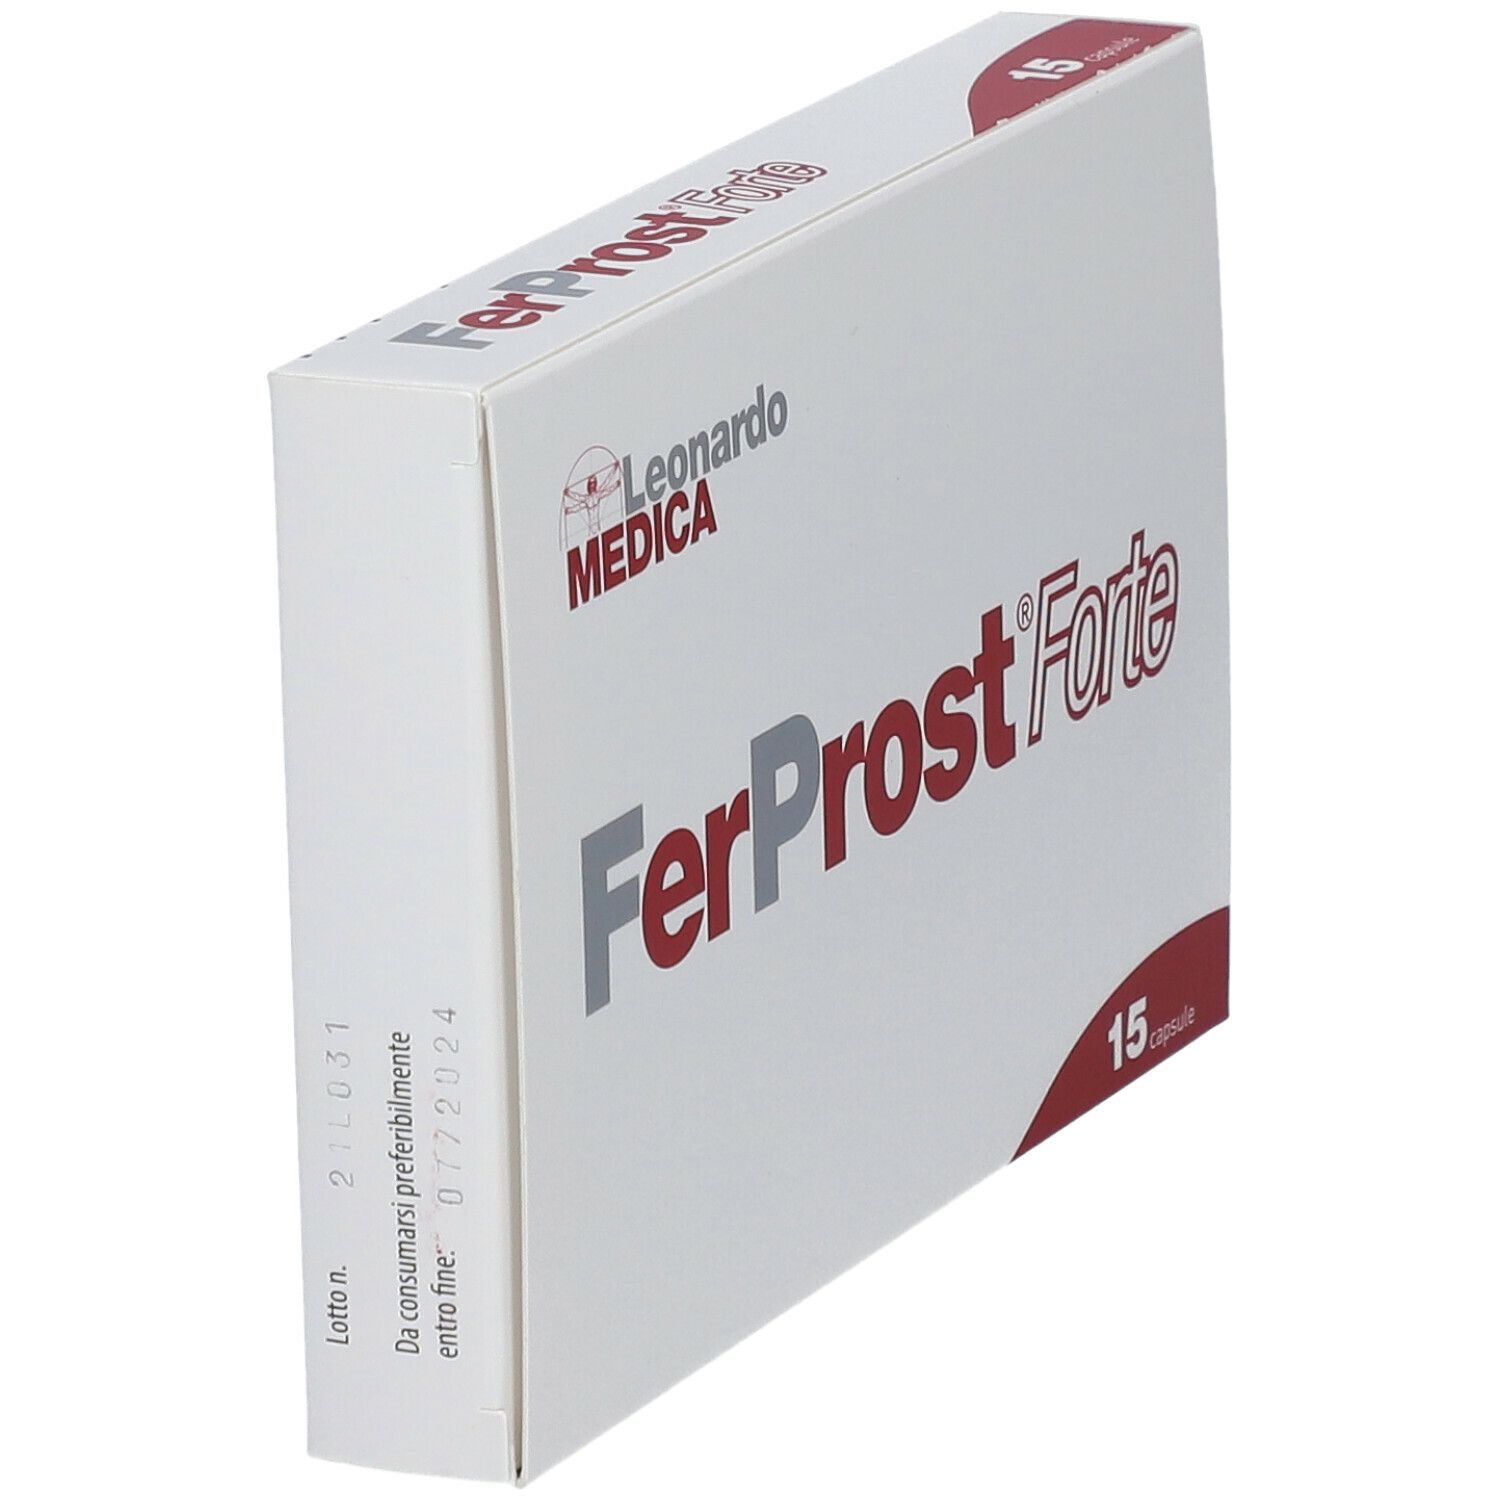 FERprost® Forte